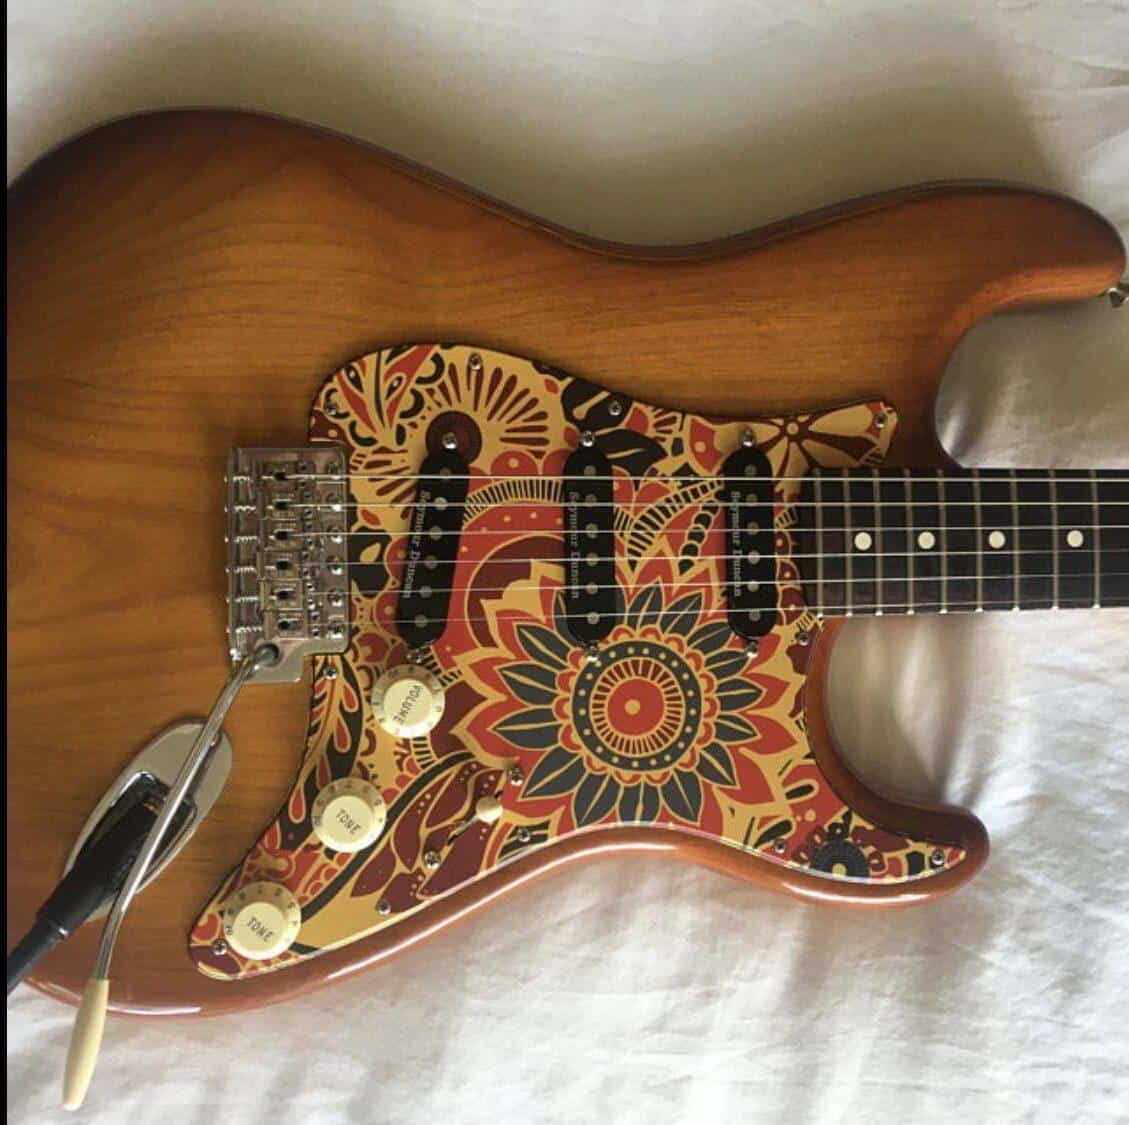 An S Style Guitar Pickguard By Carmedon